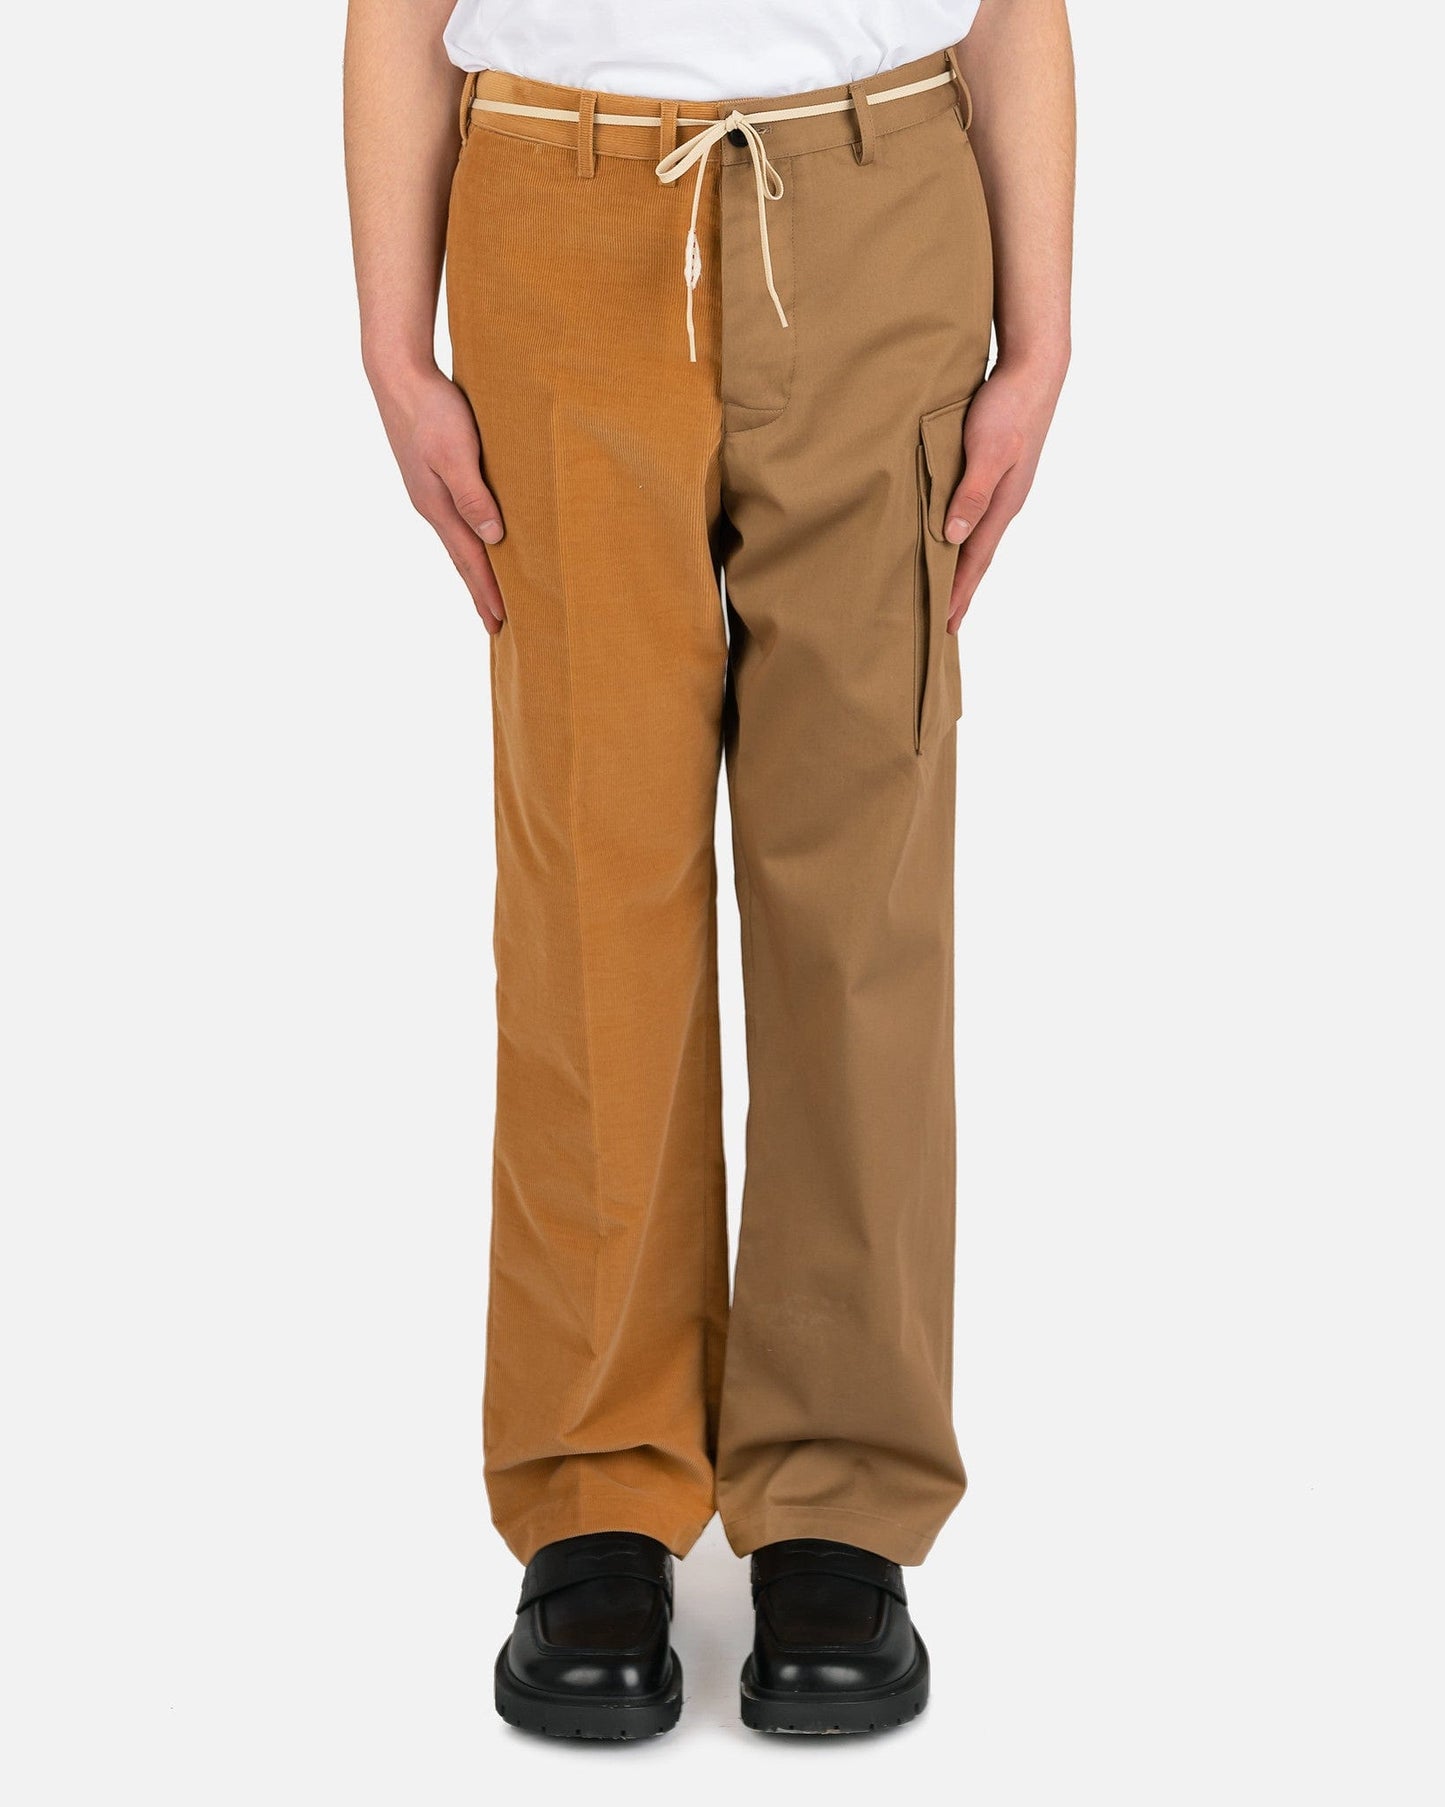 Marni Men's Pants Asymmetrical Cargo Pant in Hazelnut